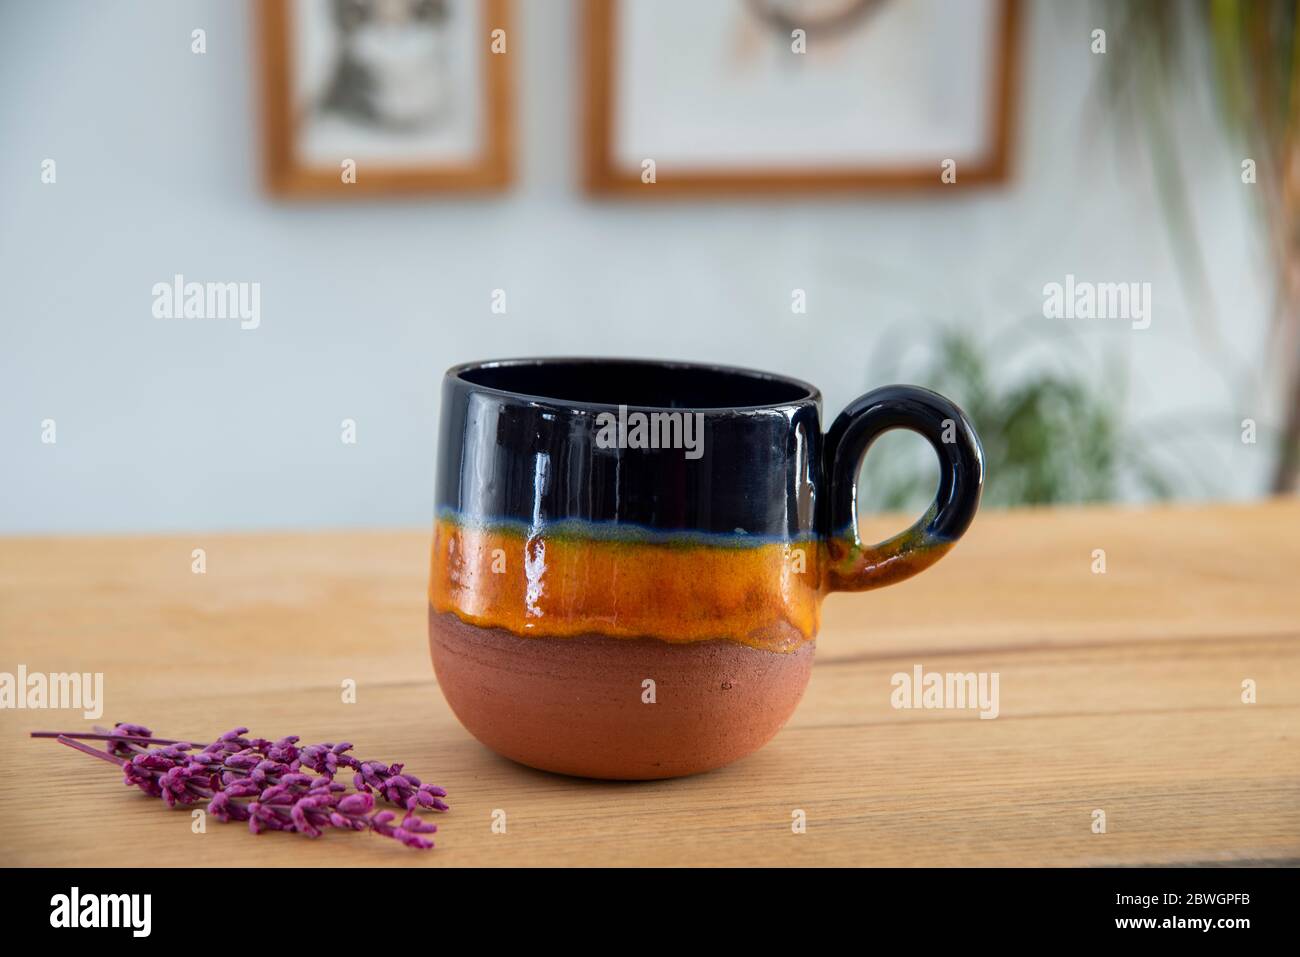 https://c8.alamy.com/comp/2BWGPFB/colorful-handmade-ceramic-coffee-cup-on-wooden-table-2BWGPFB.jpg